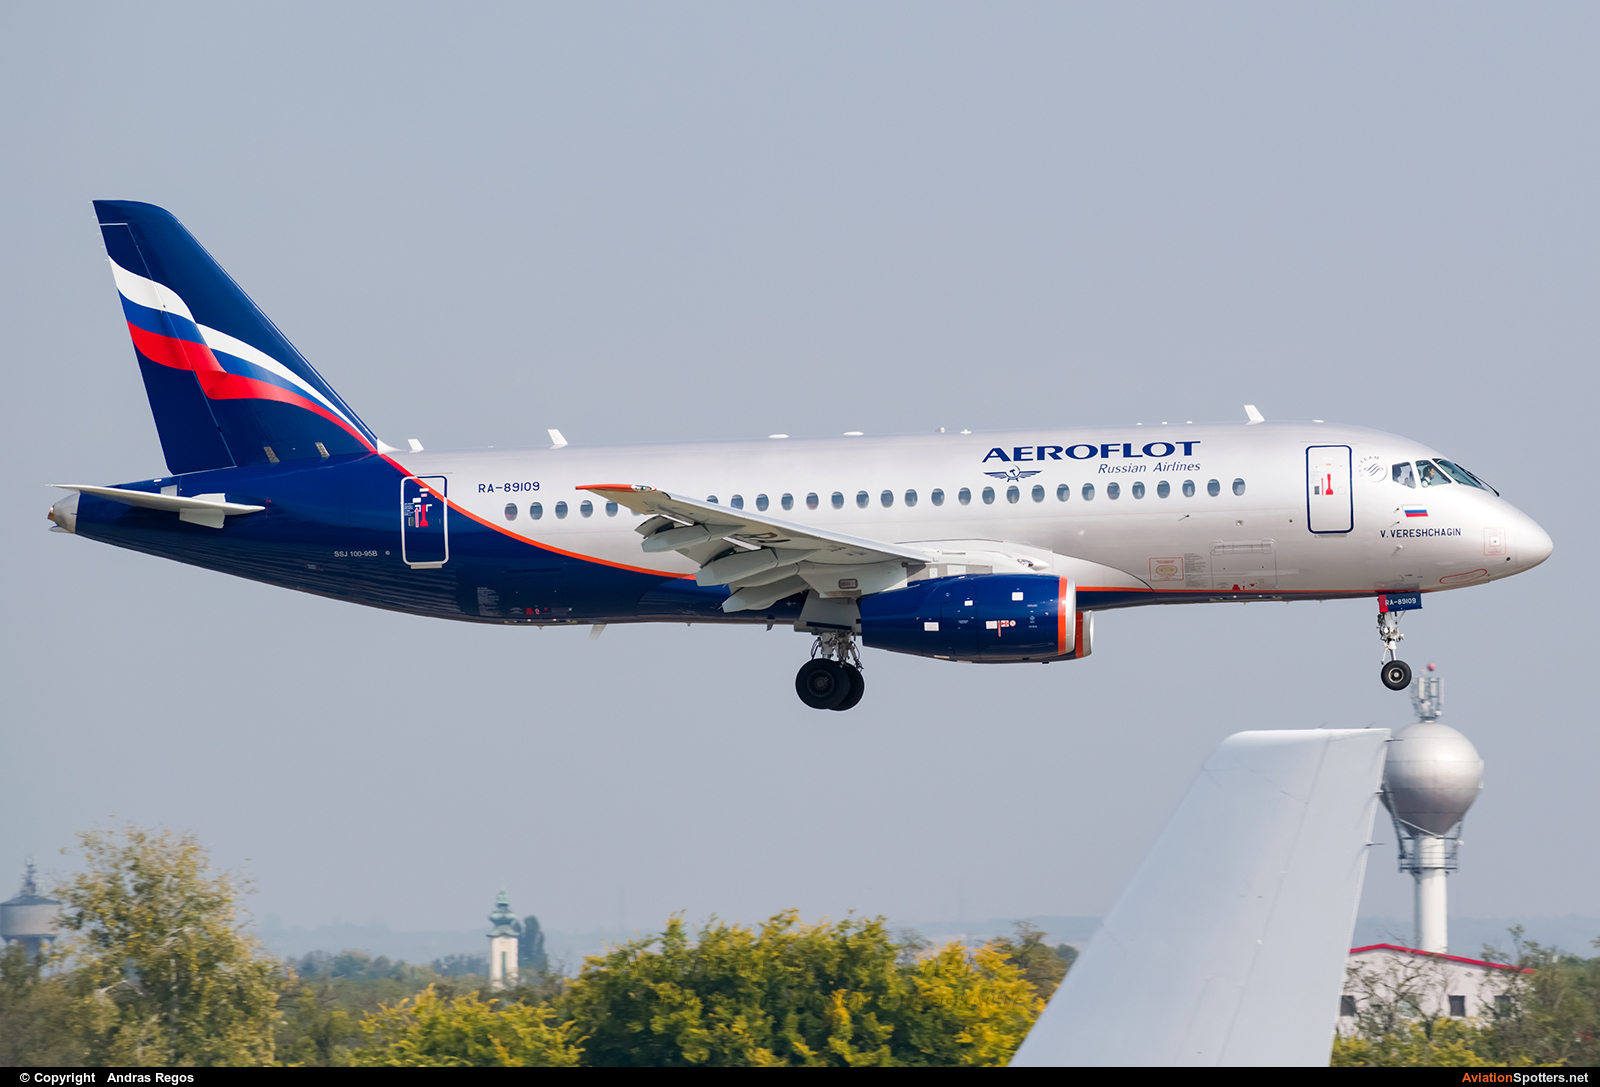 Aeroflot  -  Superjet 100  (RA-89109) By Andras Regos (regos)